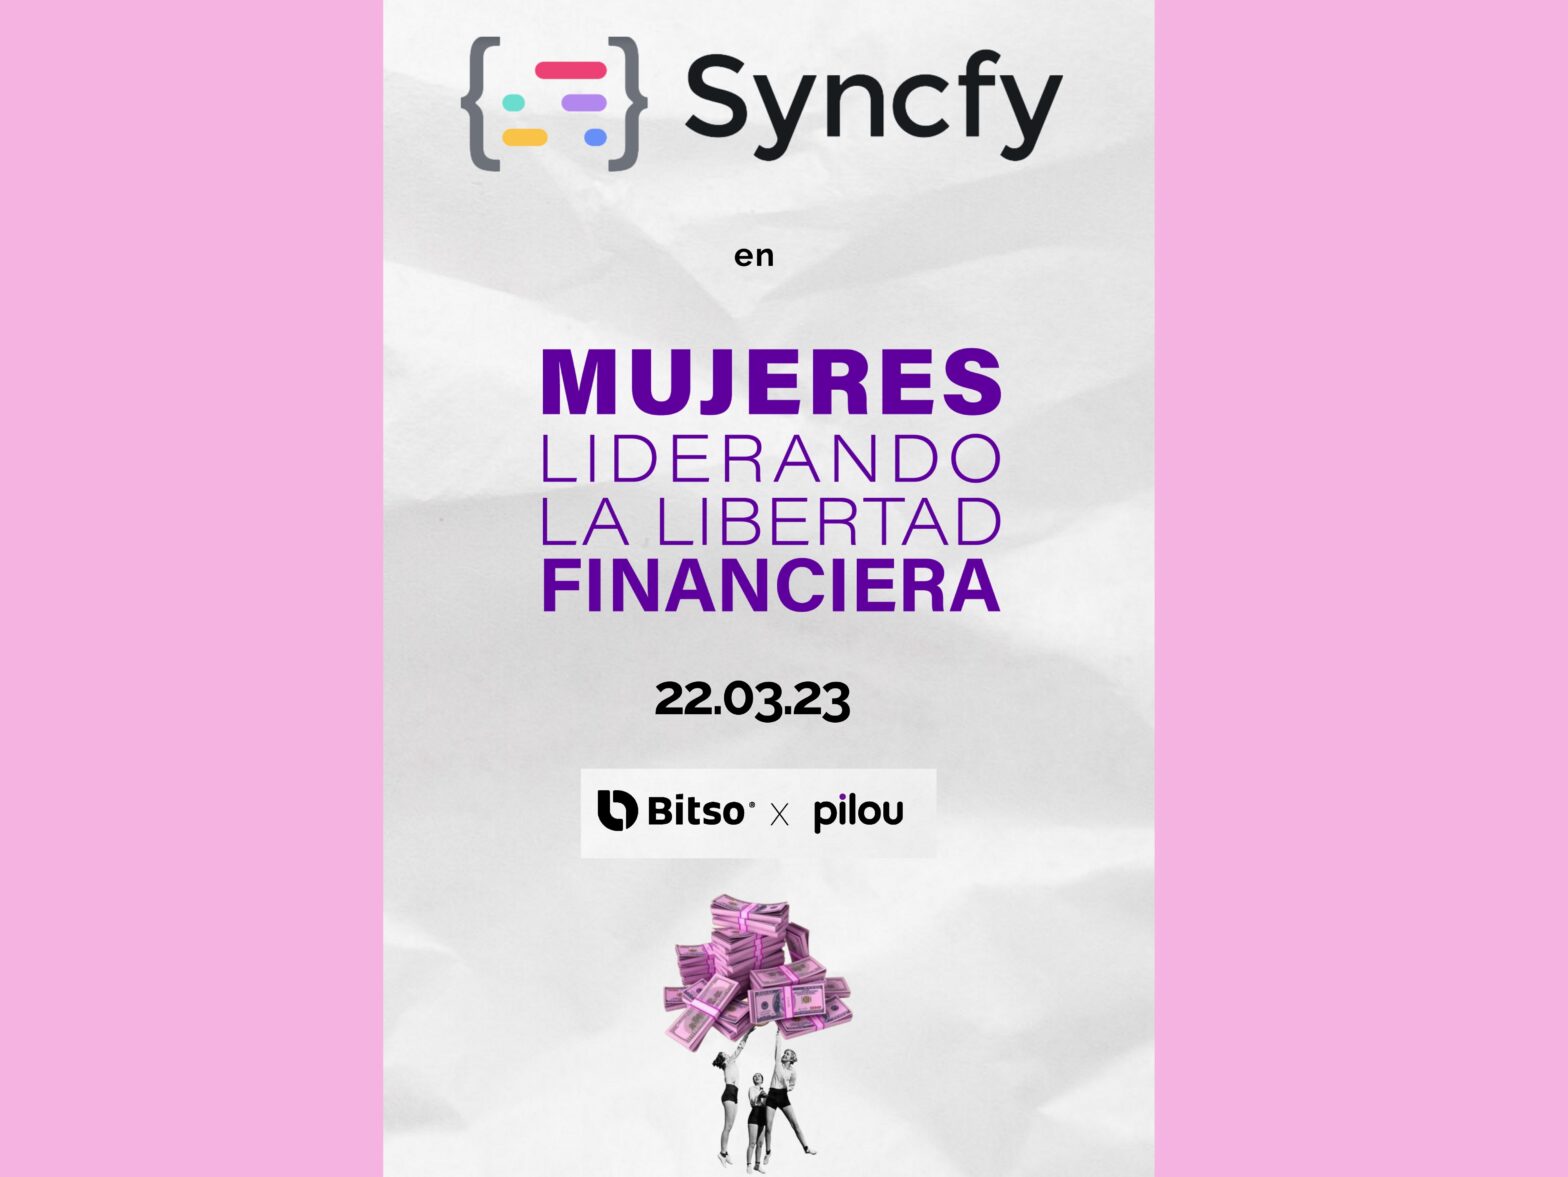 Syncfy sponsors “Women Leading Financial Freedom”